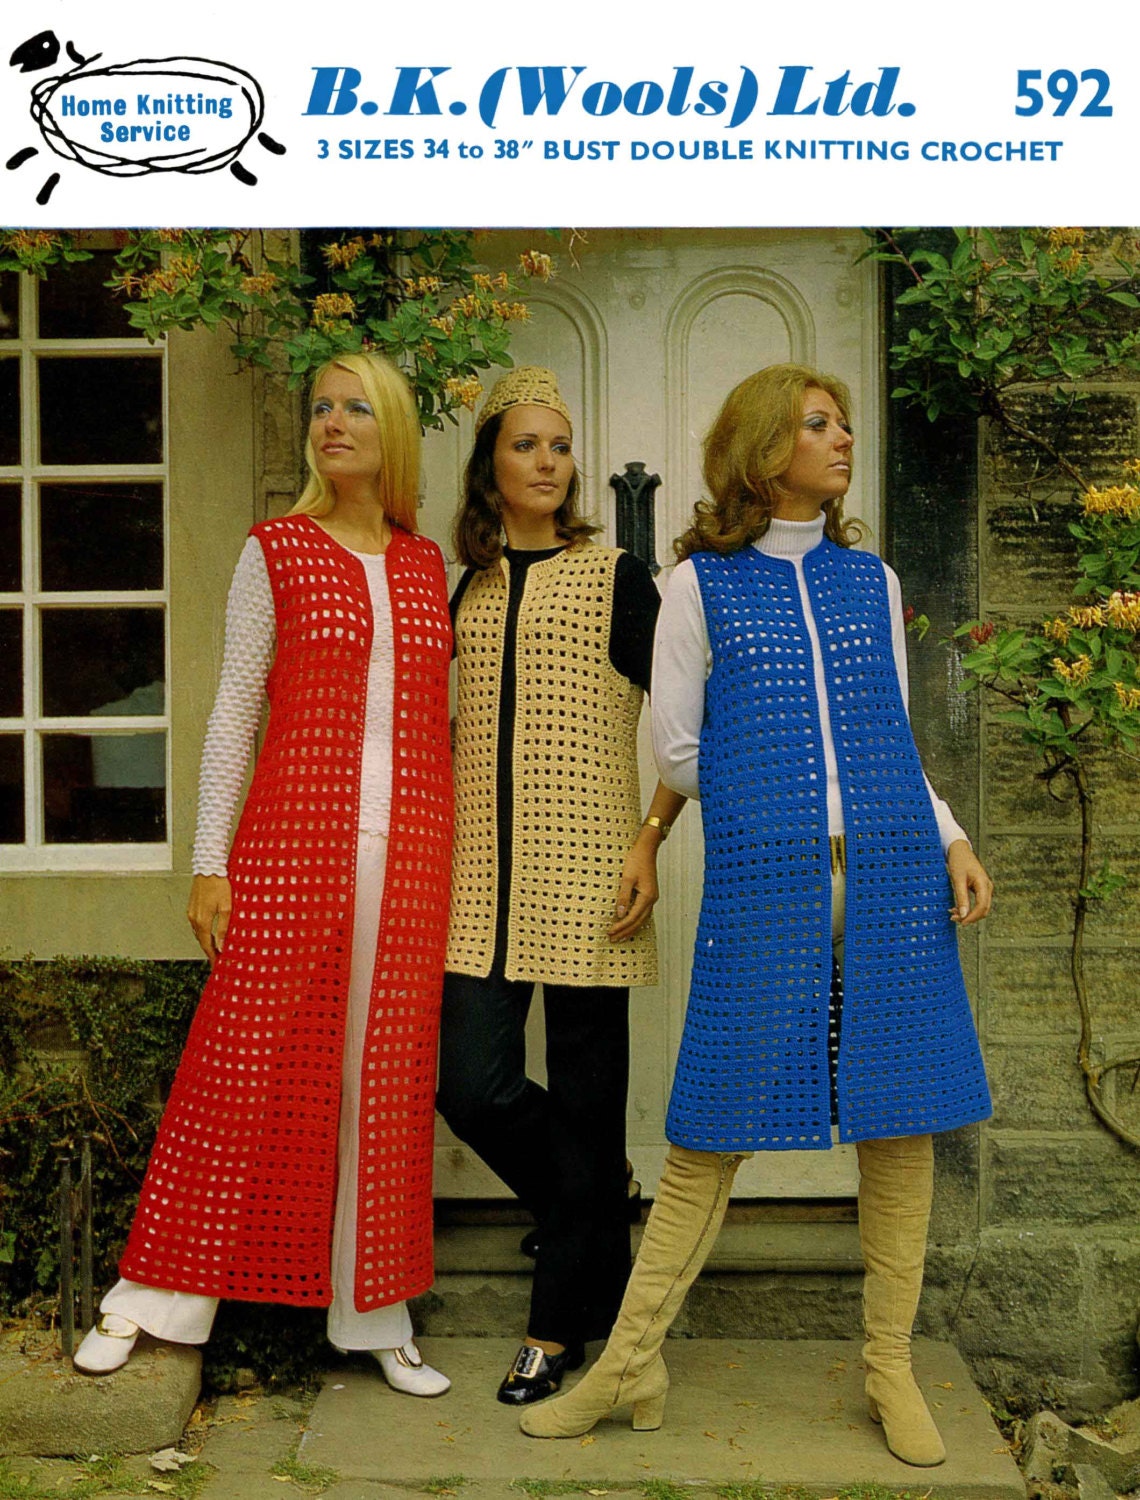 Ladies Long Sleeveless Jacket, DK, 34"-38" Bust, 70s Crochet Pattern, B.K.Wools 592